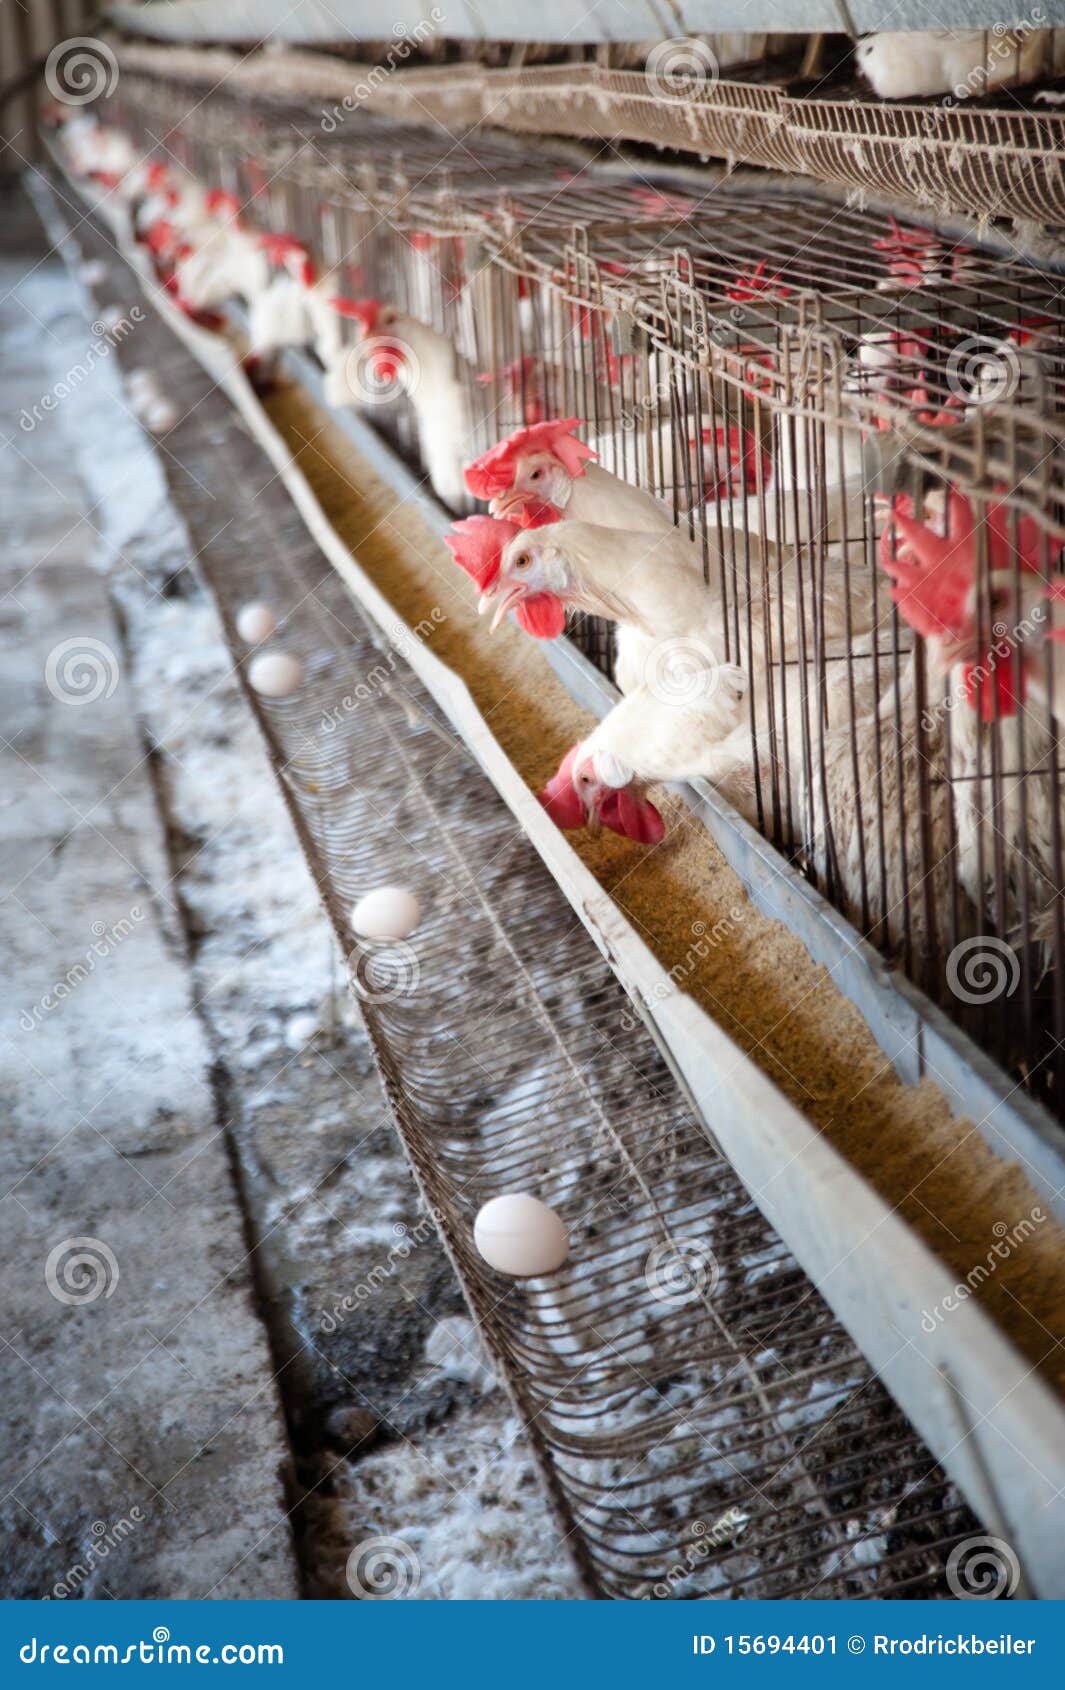 Egg Hen House Stock Image - Image: 15694401